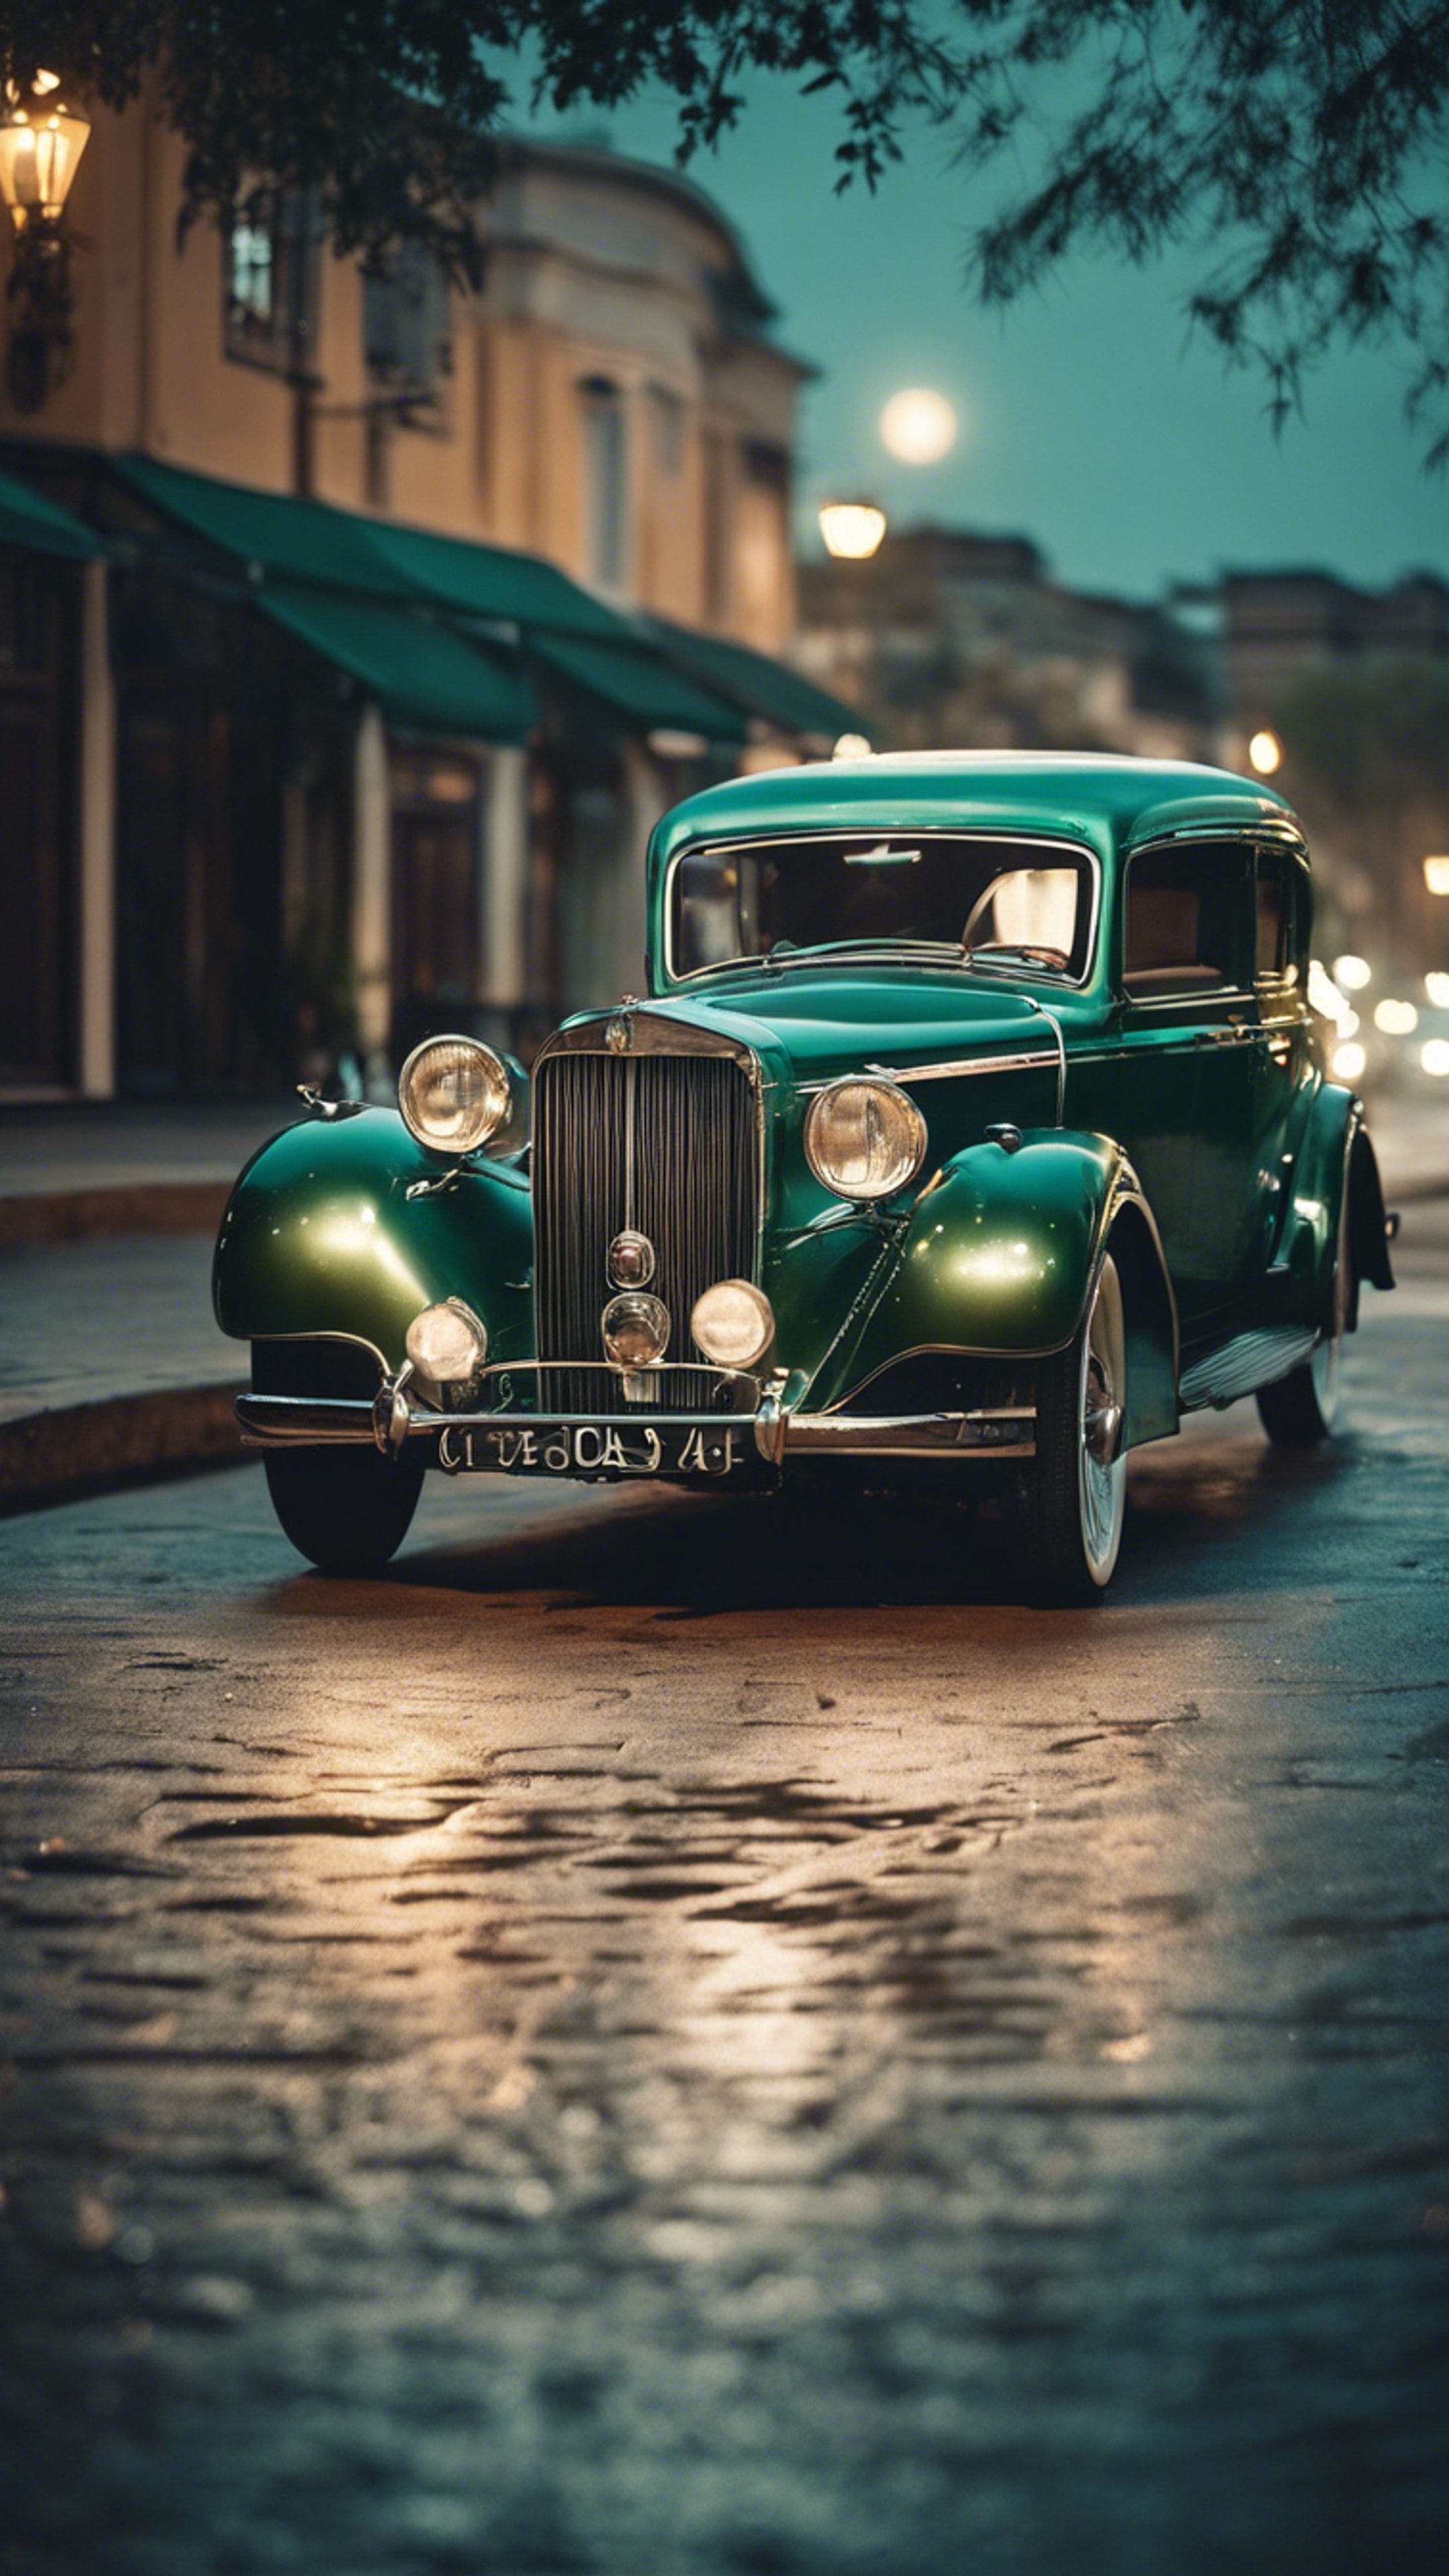 A luxurious antique car painted in cool dark green under the moonlight. Hintergrund[5cdba2e68b66456f8c5a]